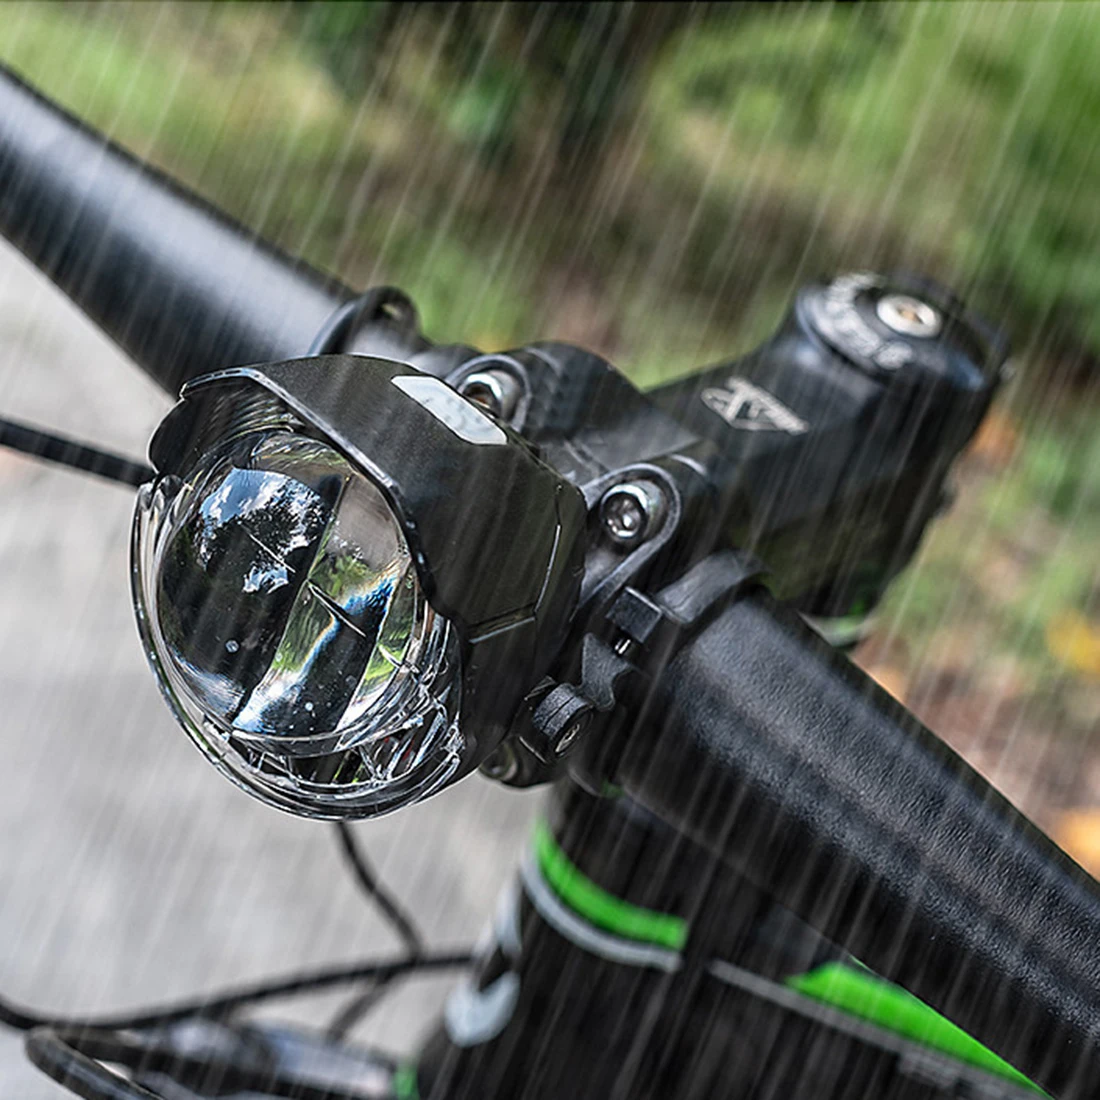 Leadbike Ld28 Usb Rechargeable Bike Light T6 Bicycle Headlight 750lms Ip4 Waterproof 3 Modes Hot Sale Bike Accessories Bicycle Lights AliExpress